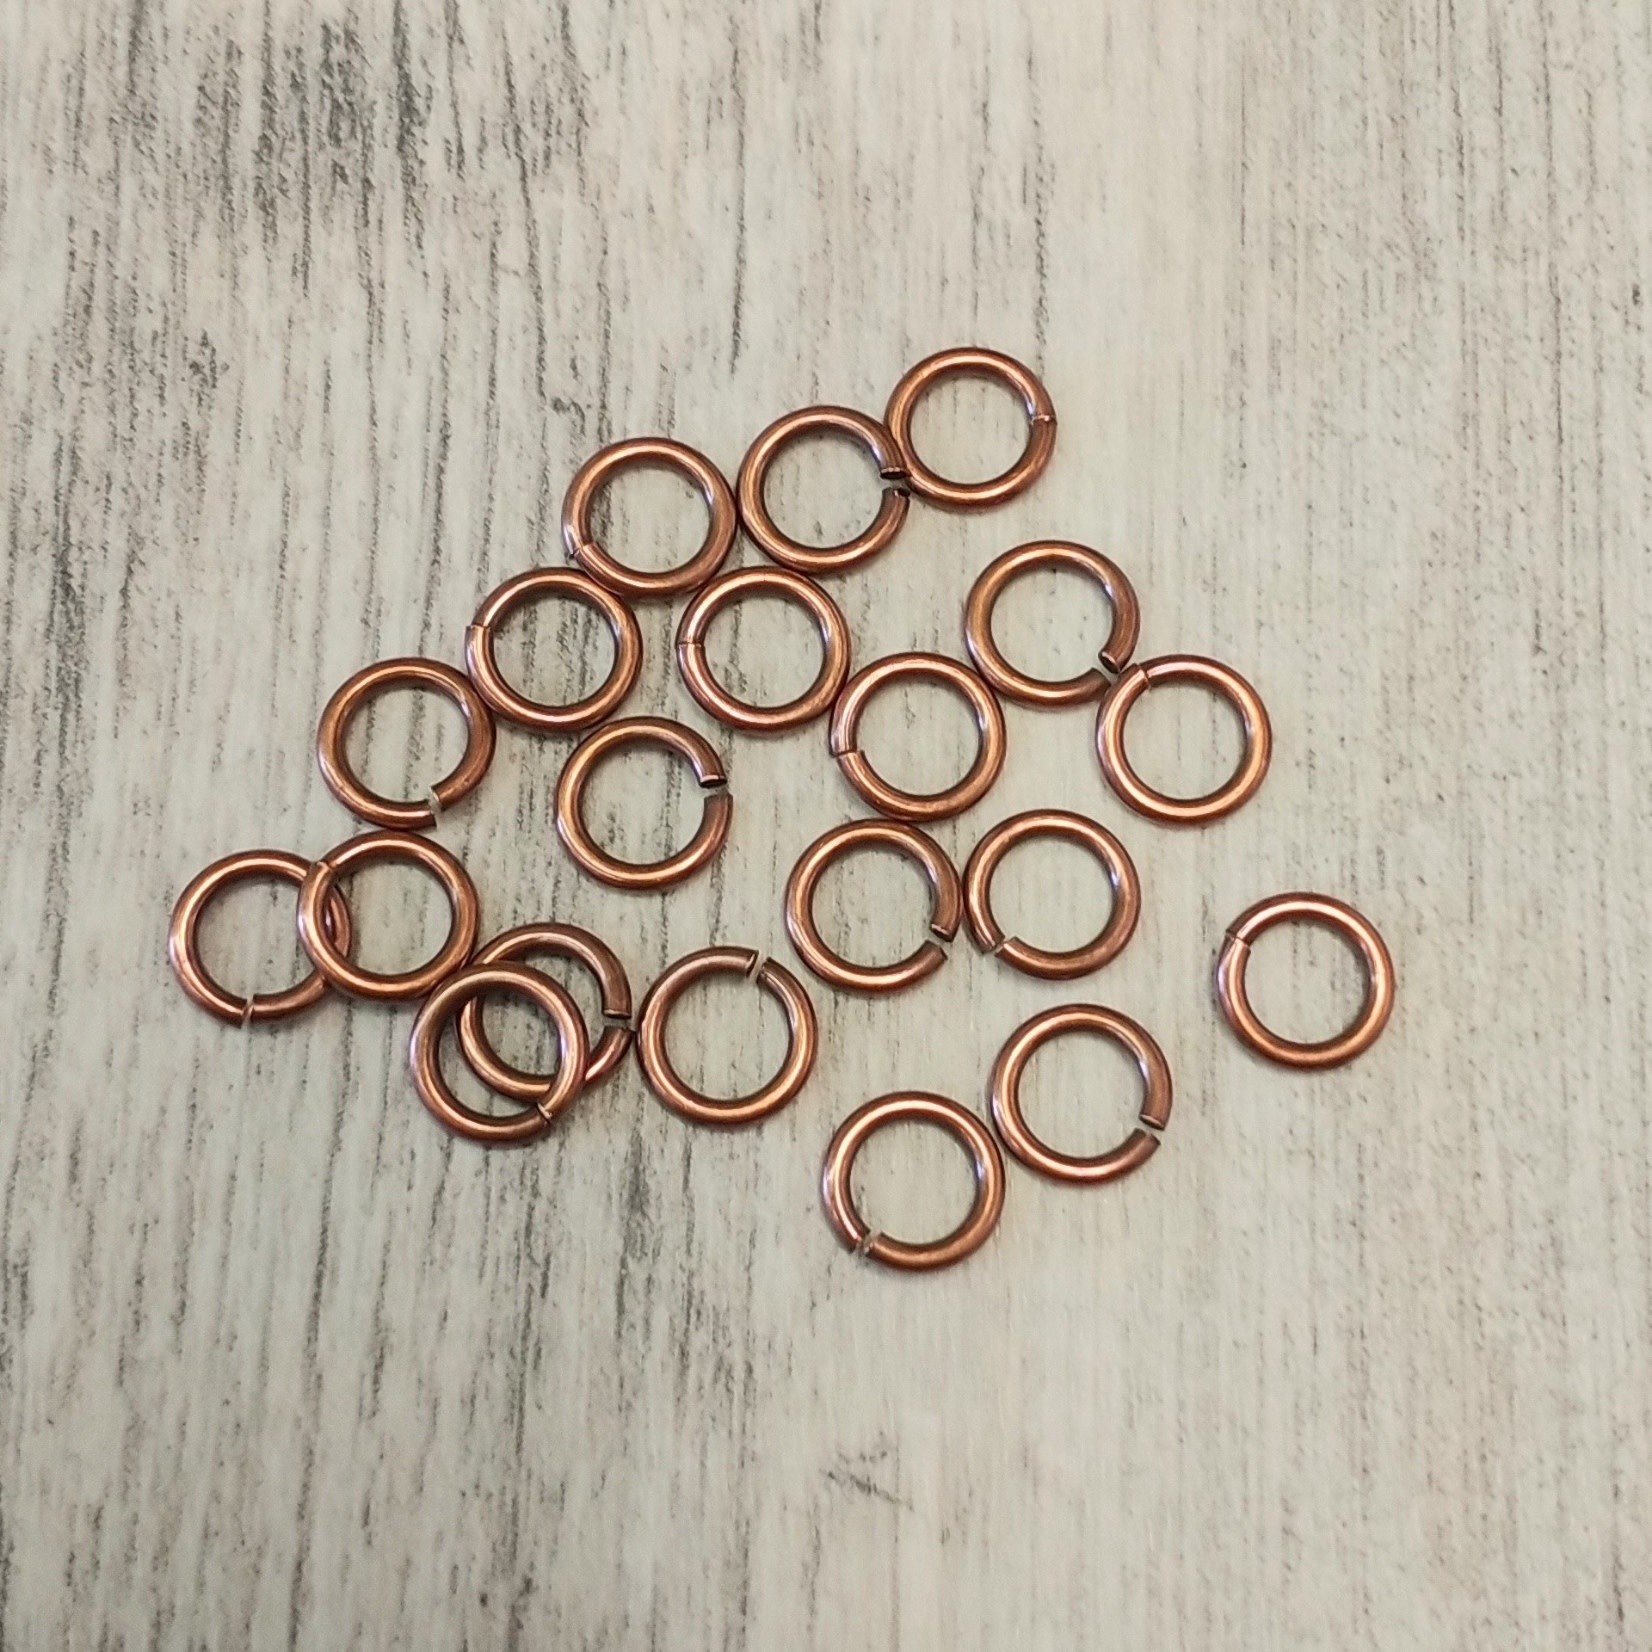 TierraCast Tierracast Copper Round Jump Ring 16 Ga, 5mm ID - 20 pieces